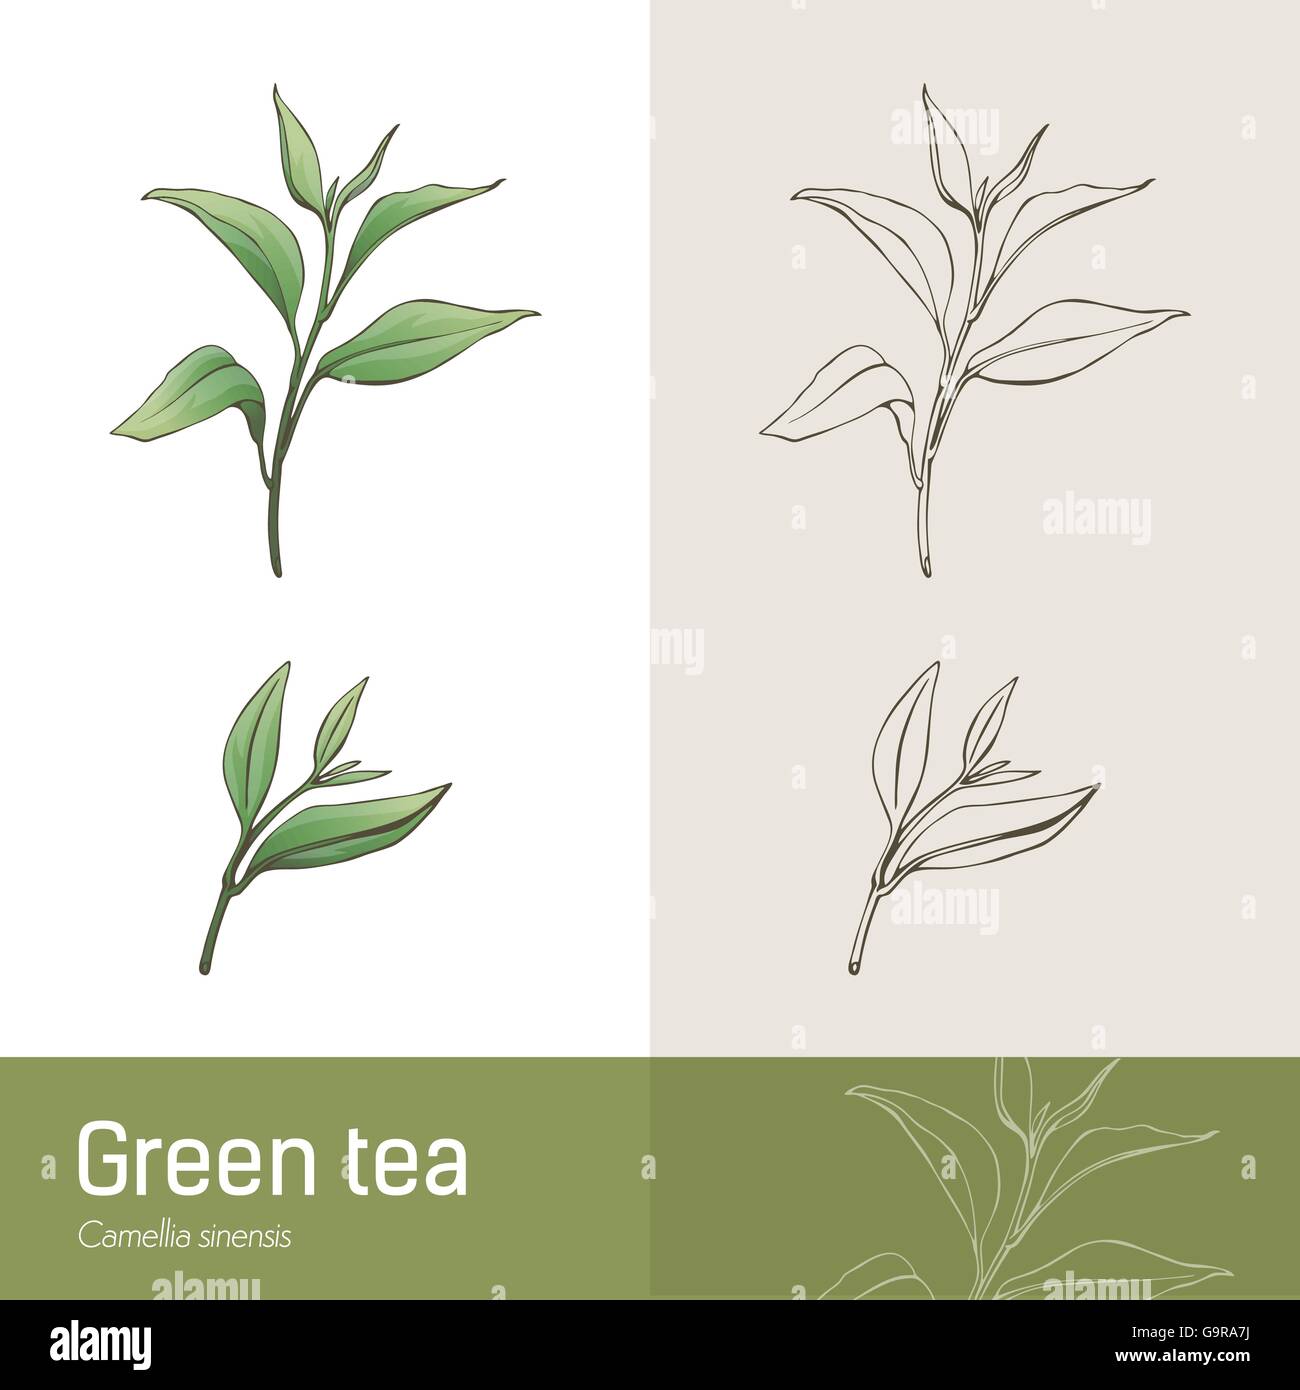 Cammelia sinensis plant botanical drawing, green tea production Stock Vector